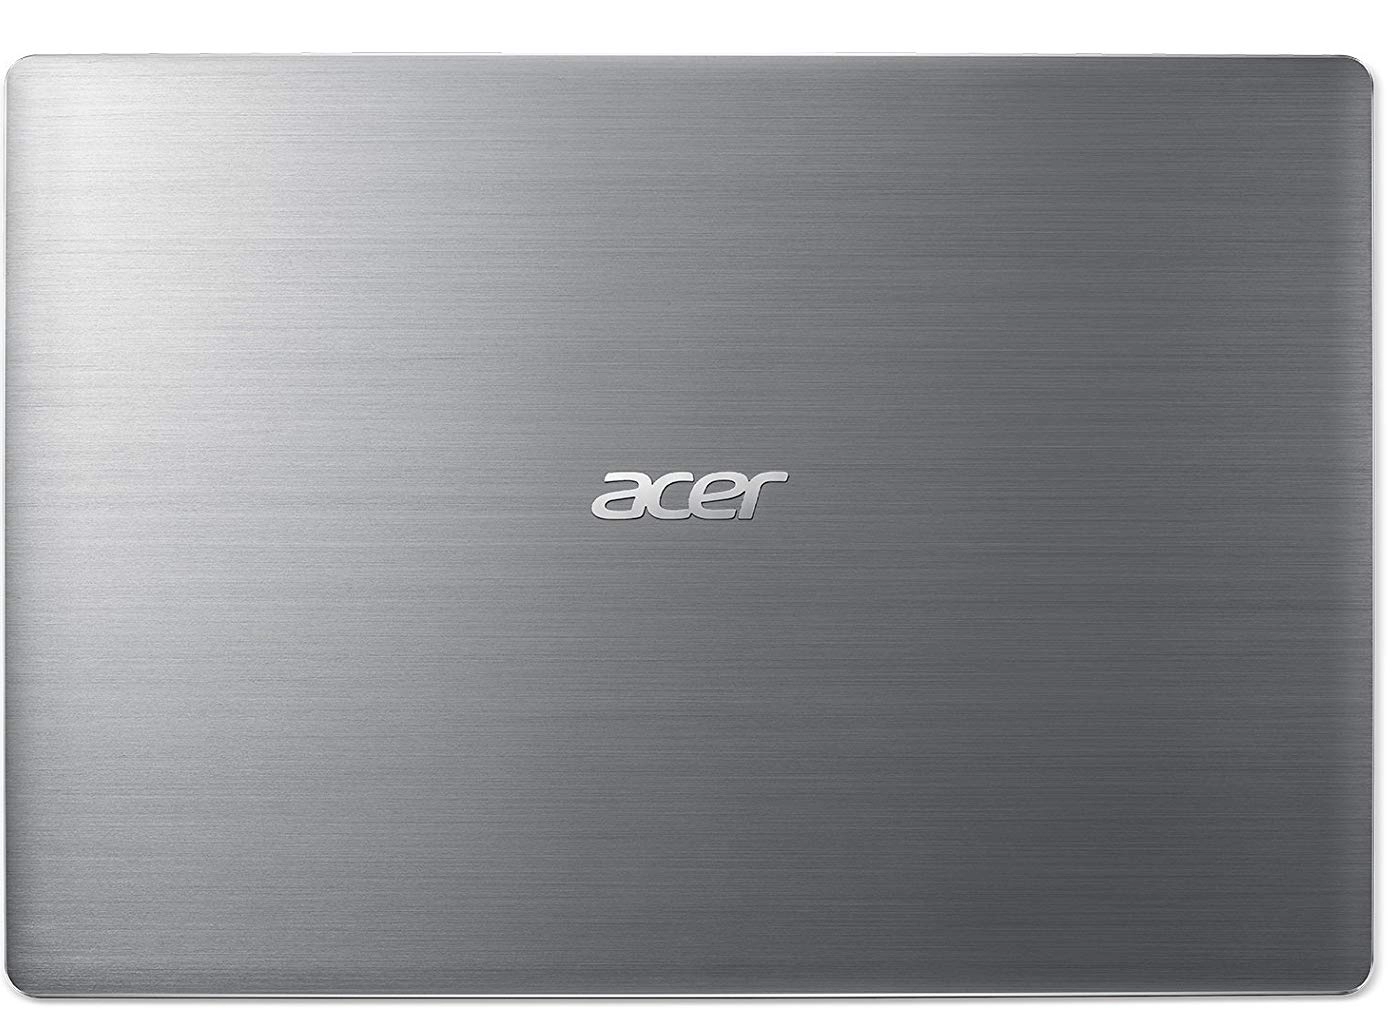 Laptop Acer Swift 3 SF314-55-37QN, 8 GB, Linux, Argintiu